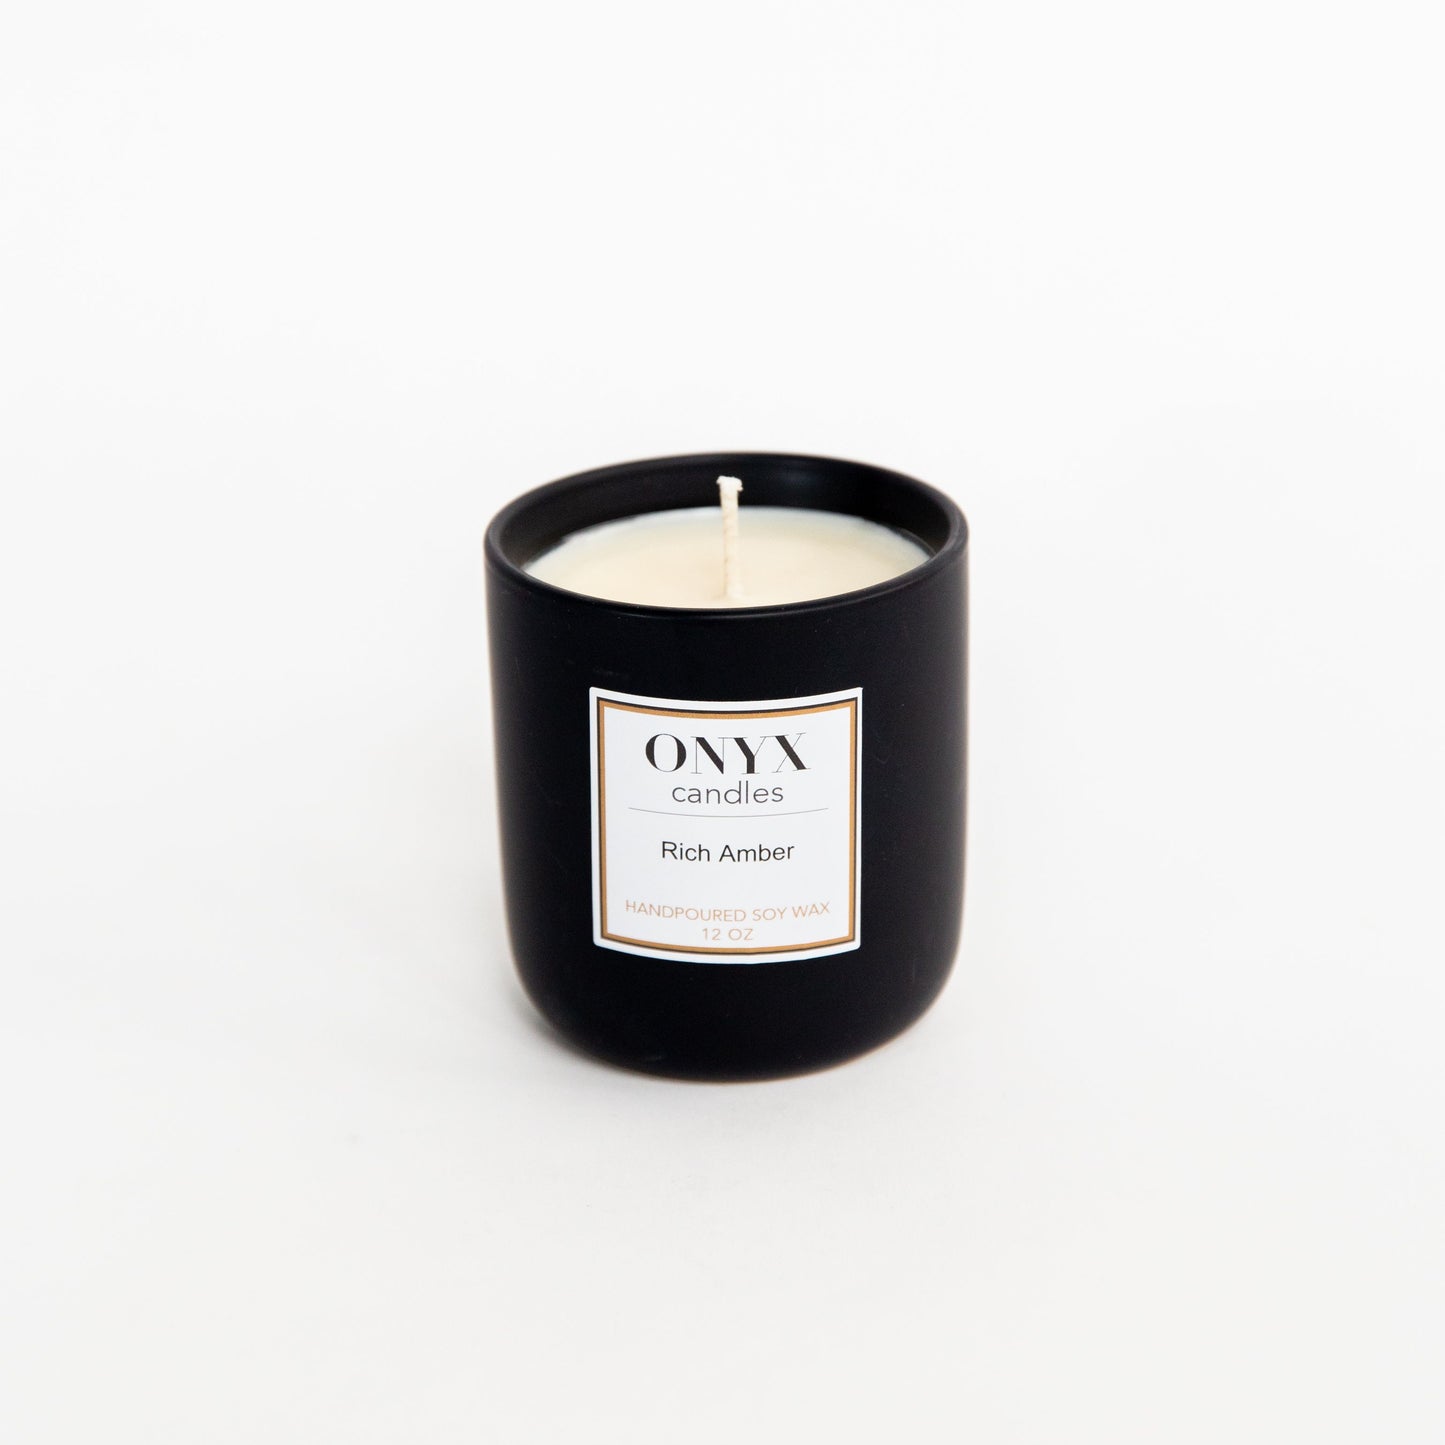 12 oz matte black ceramic candle in the scent Rich Amber